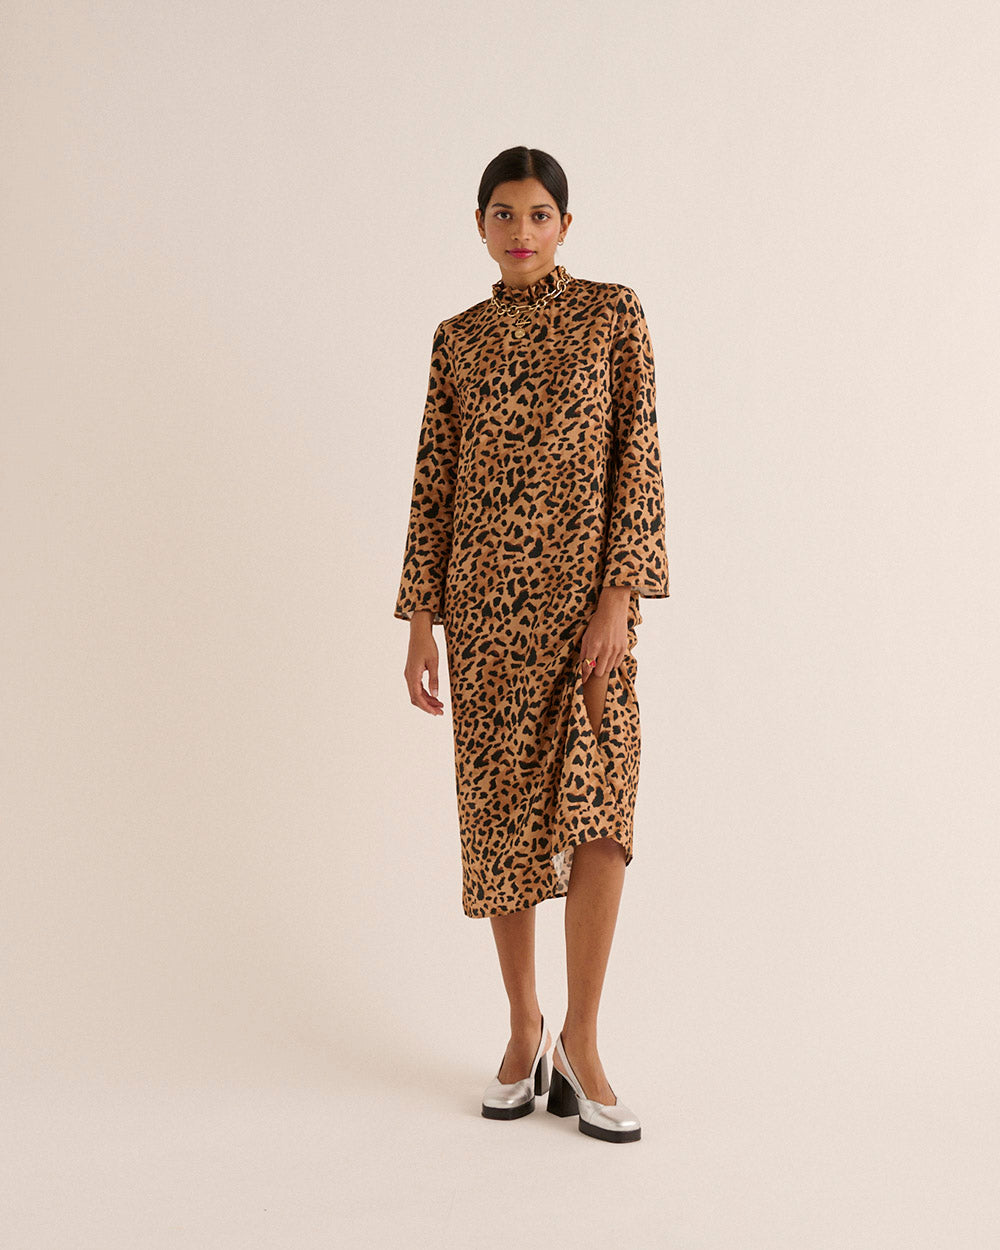 Nugget cheetah cappuccino dress